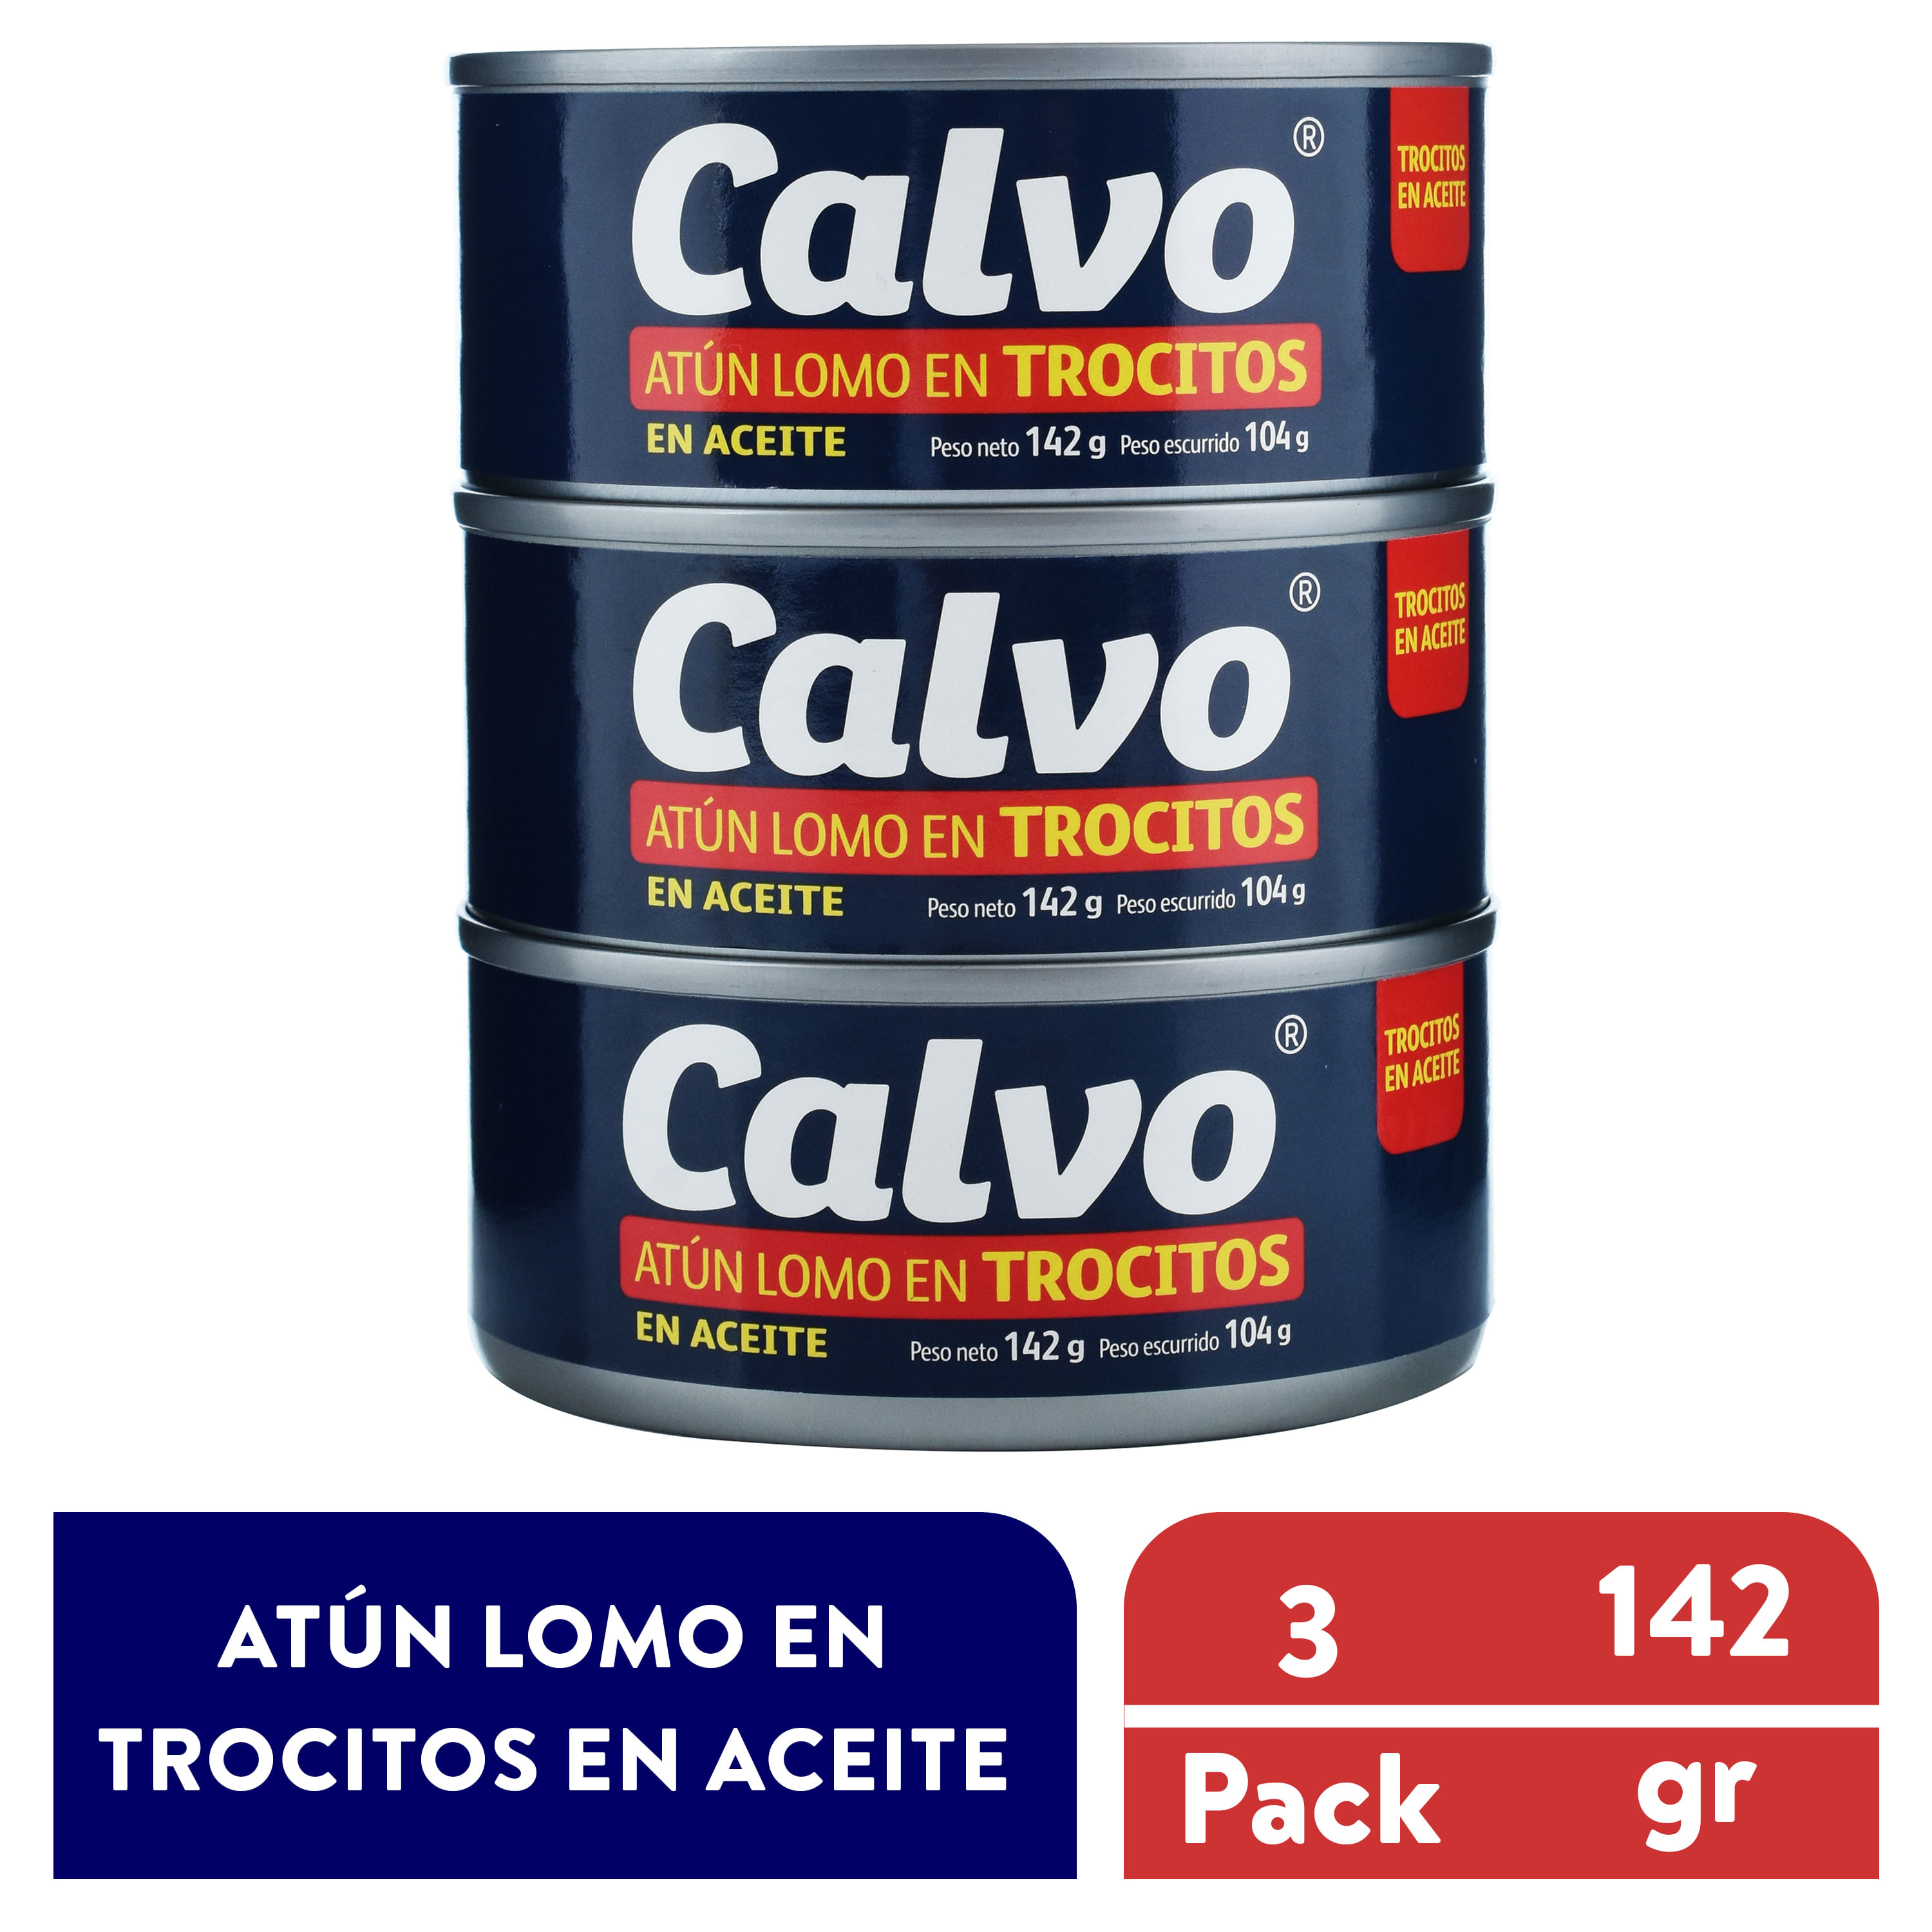 3-Pack-At-n-Calvo-Trocitos-Aceite-426gr-1-52656